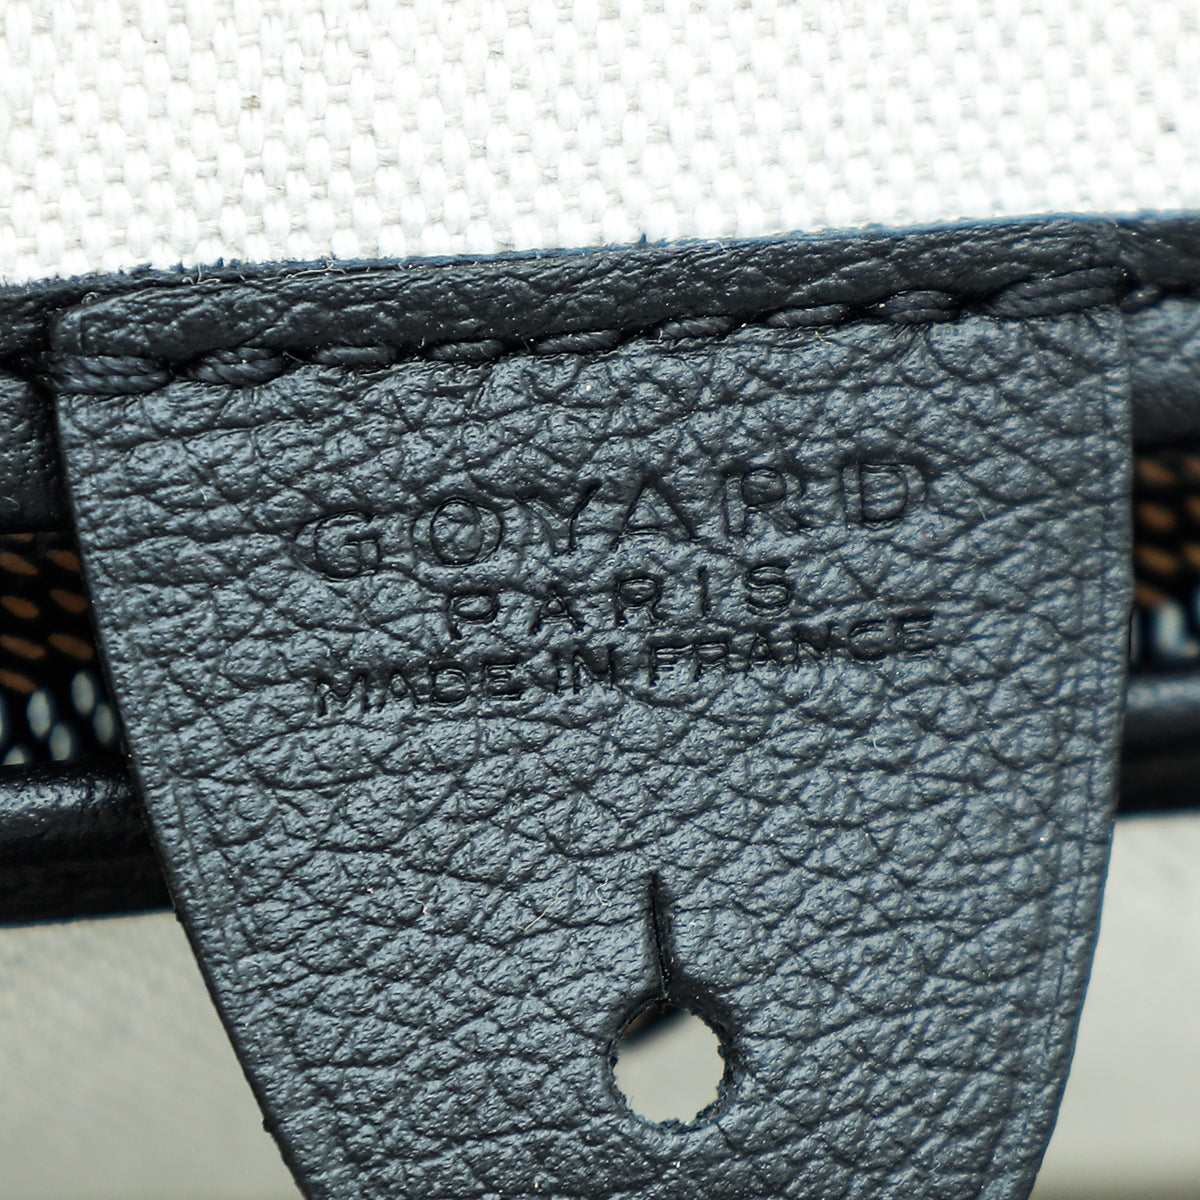 Goyard Black Goyardine Artois MM Bag – The Closet